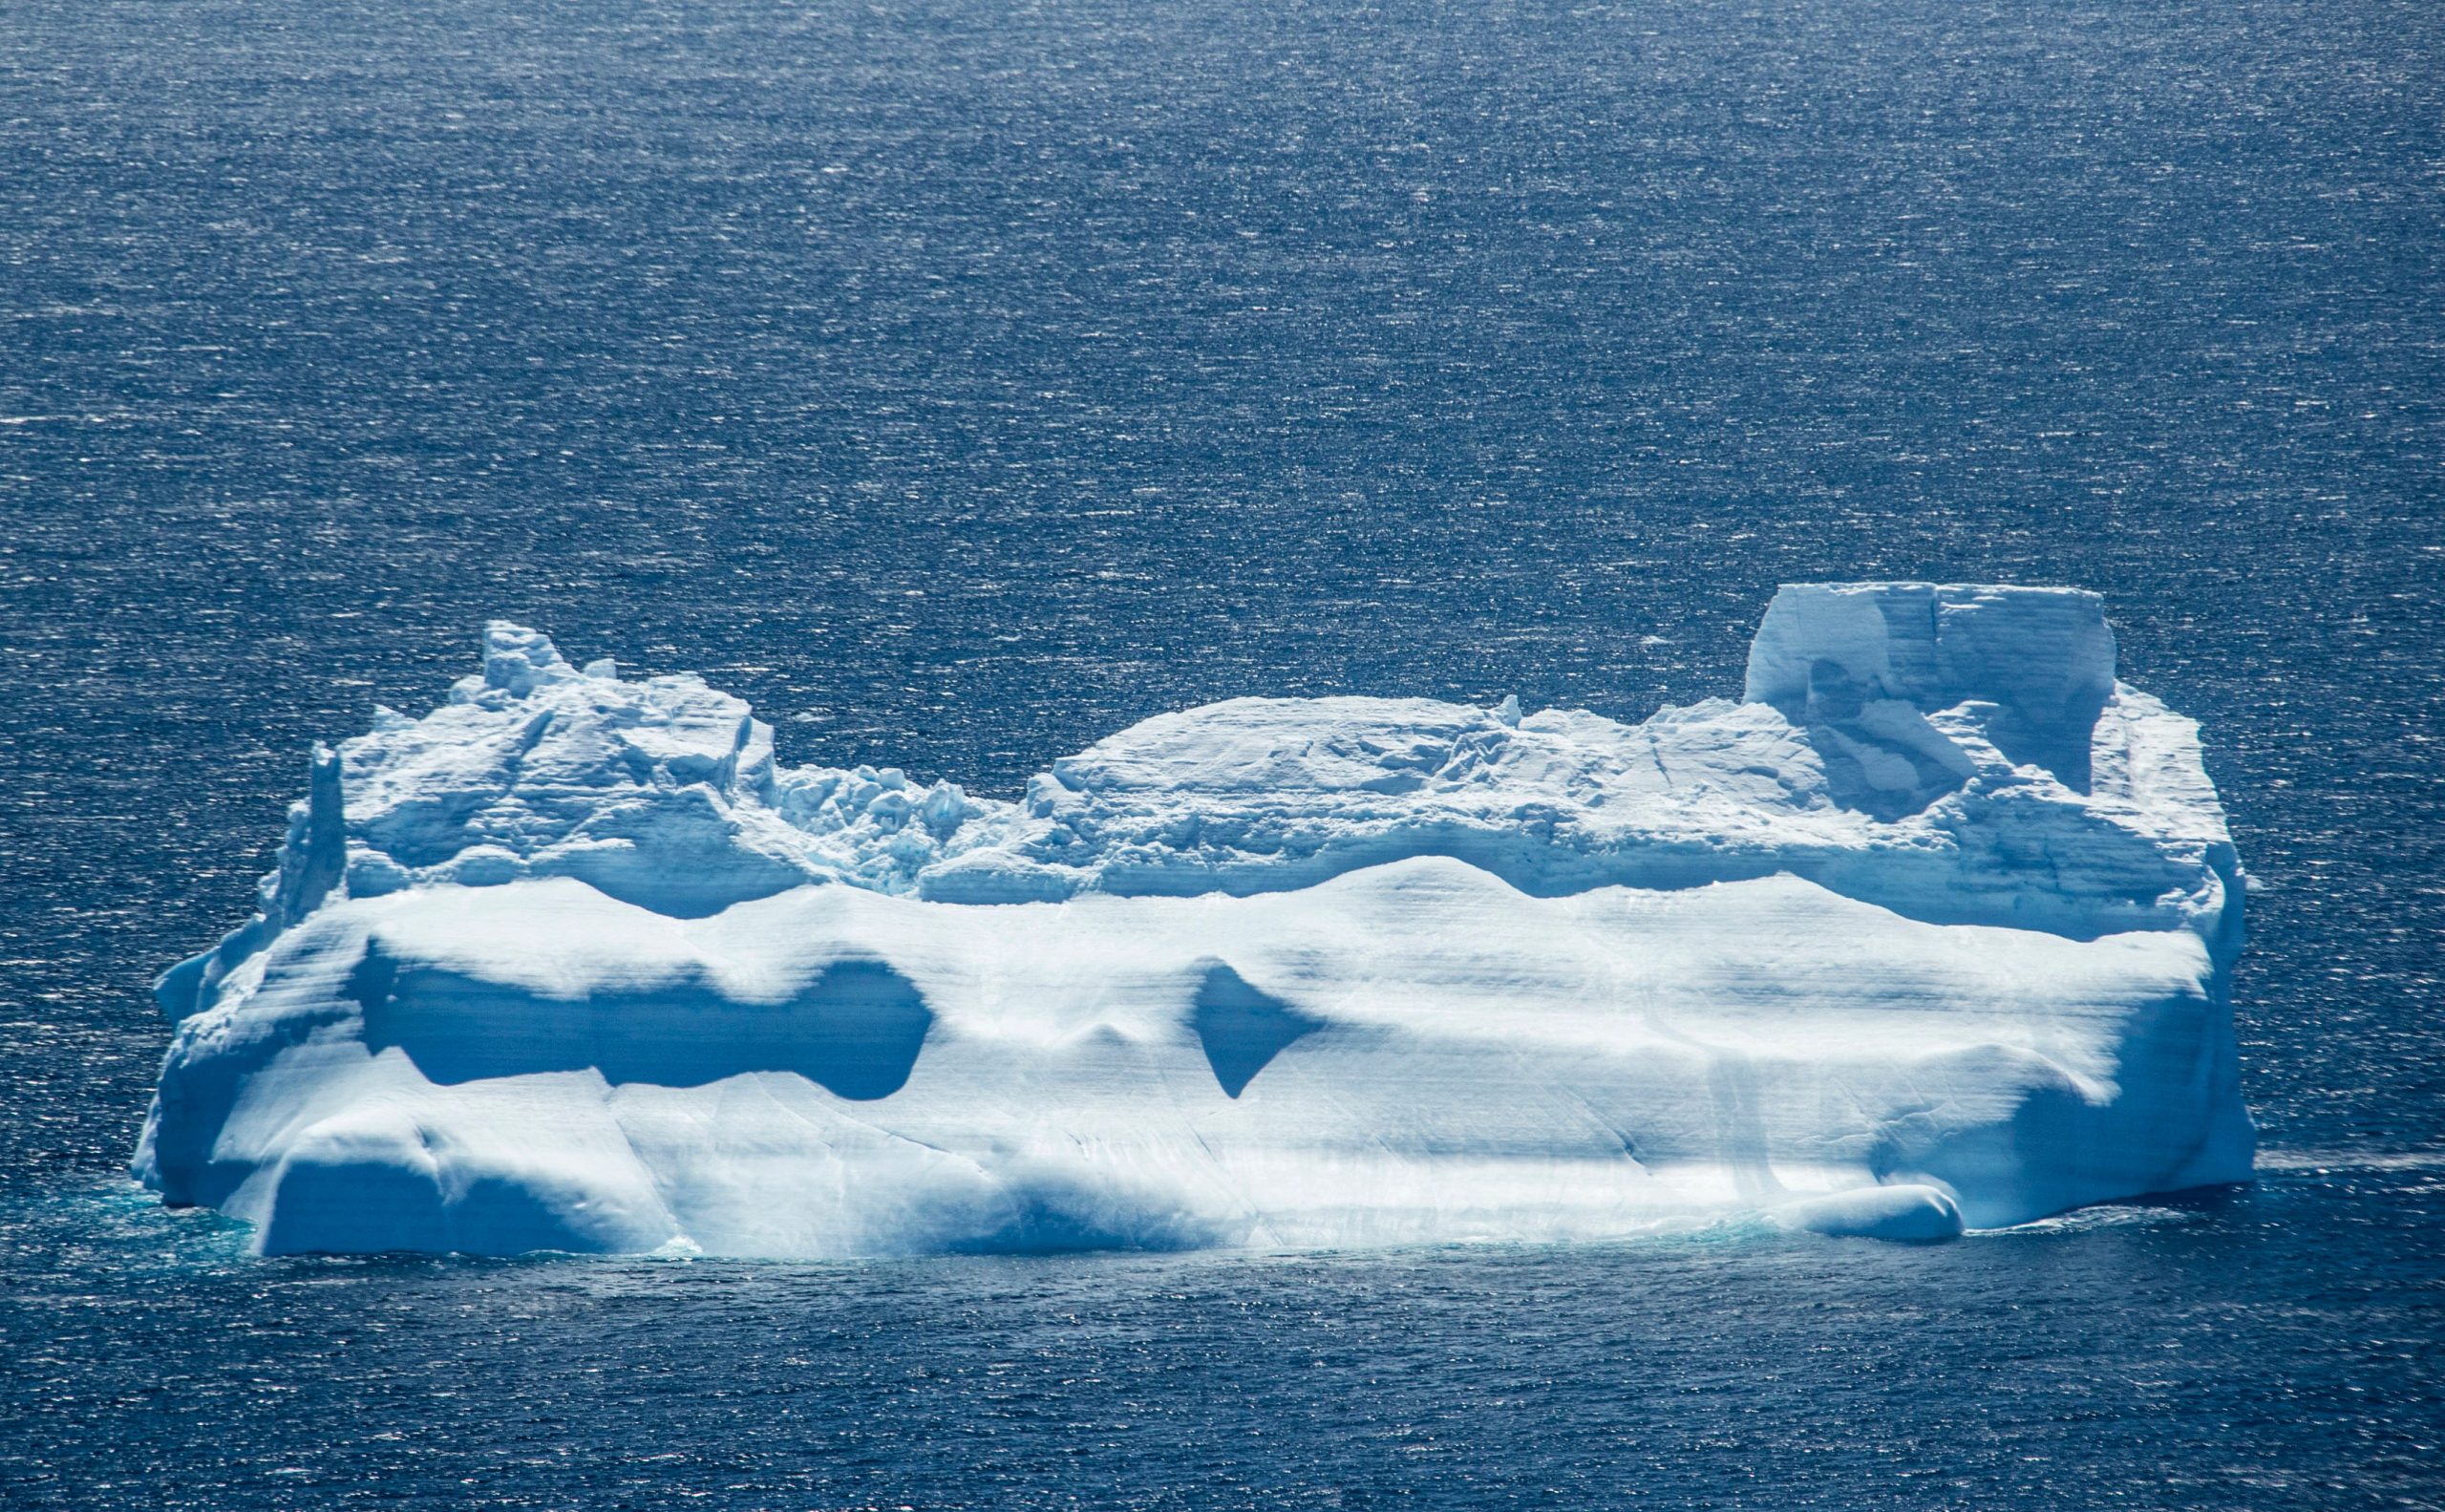 World’s largest iceberg breaks off Antarctica